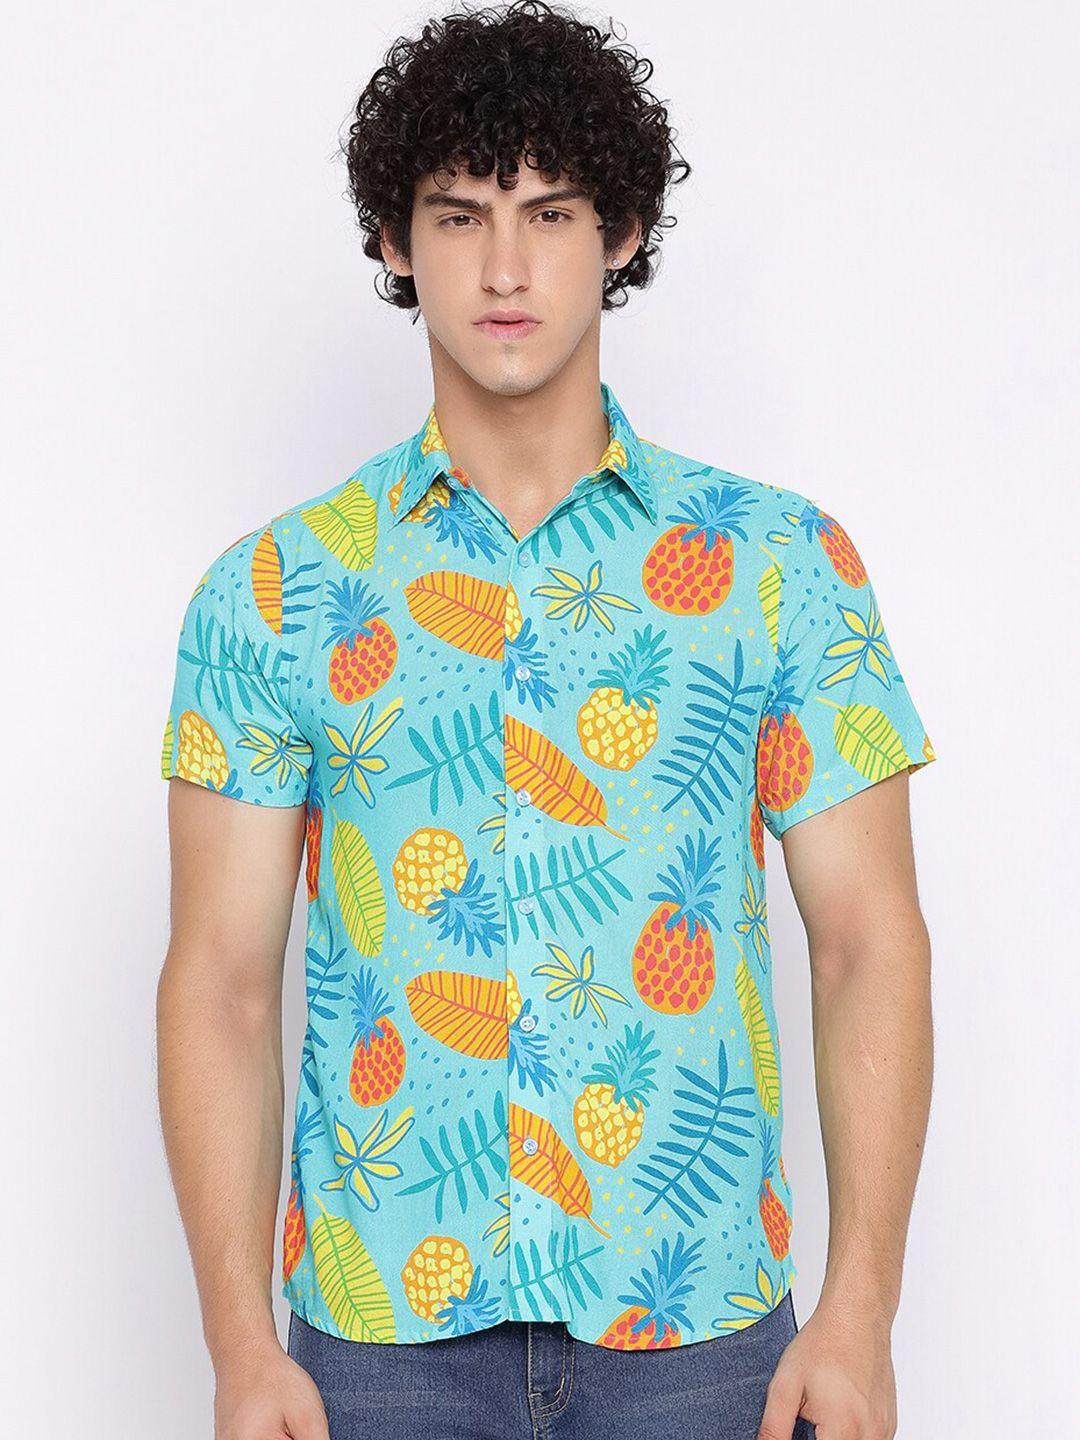 shurtz n skurtz tropical printed relaxed fit cotton casual shirt